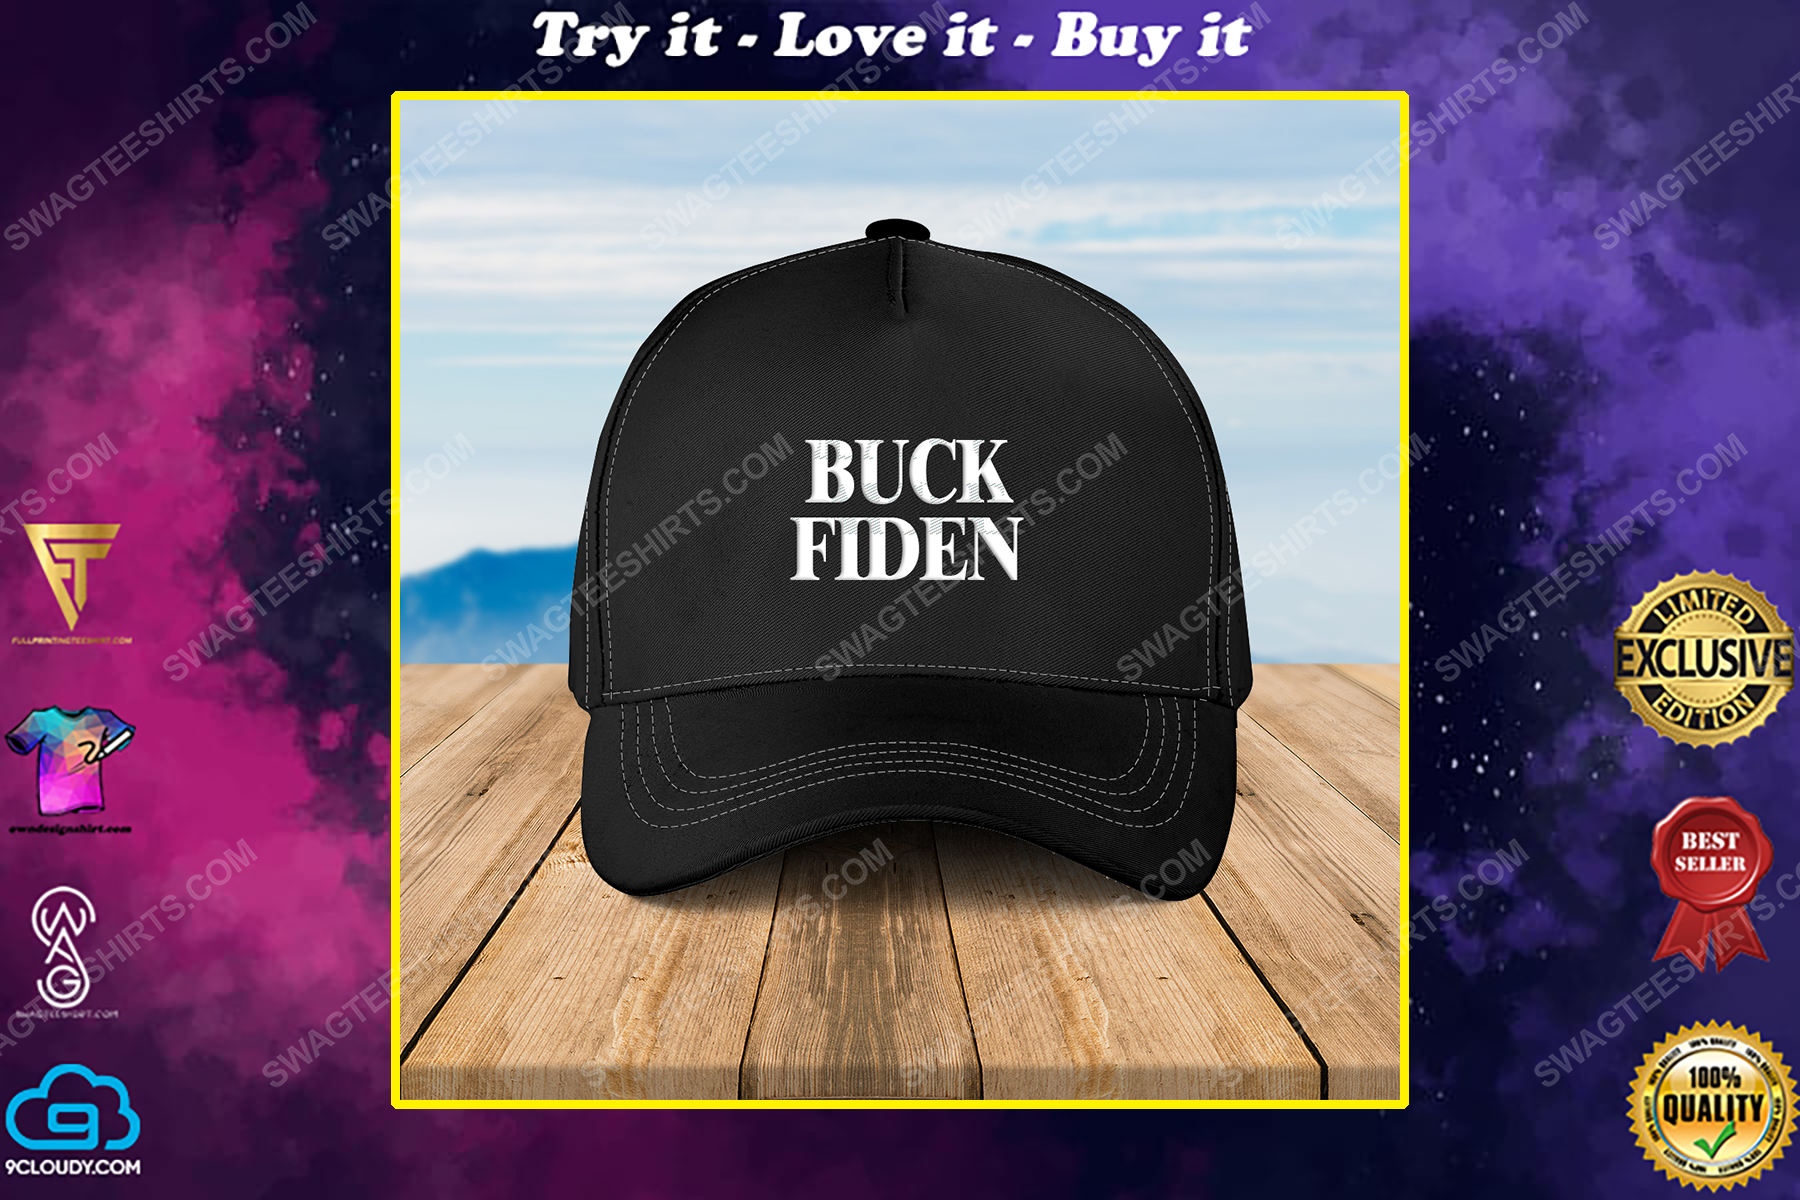 Buck fiden full print classic hat